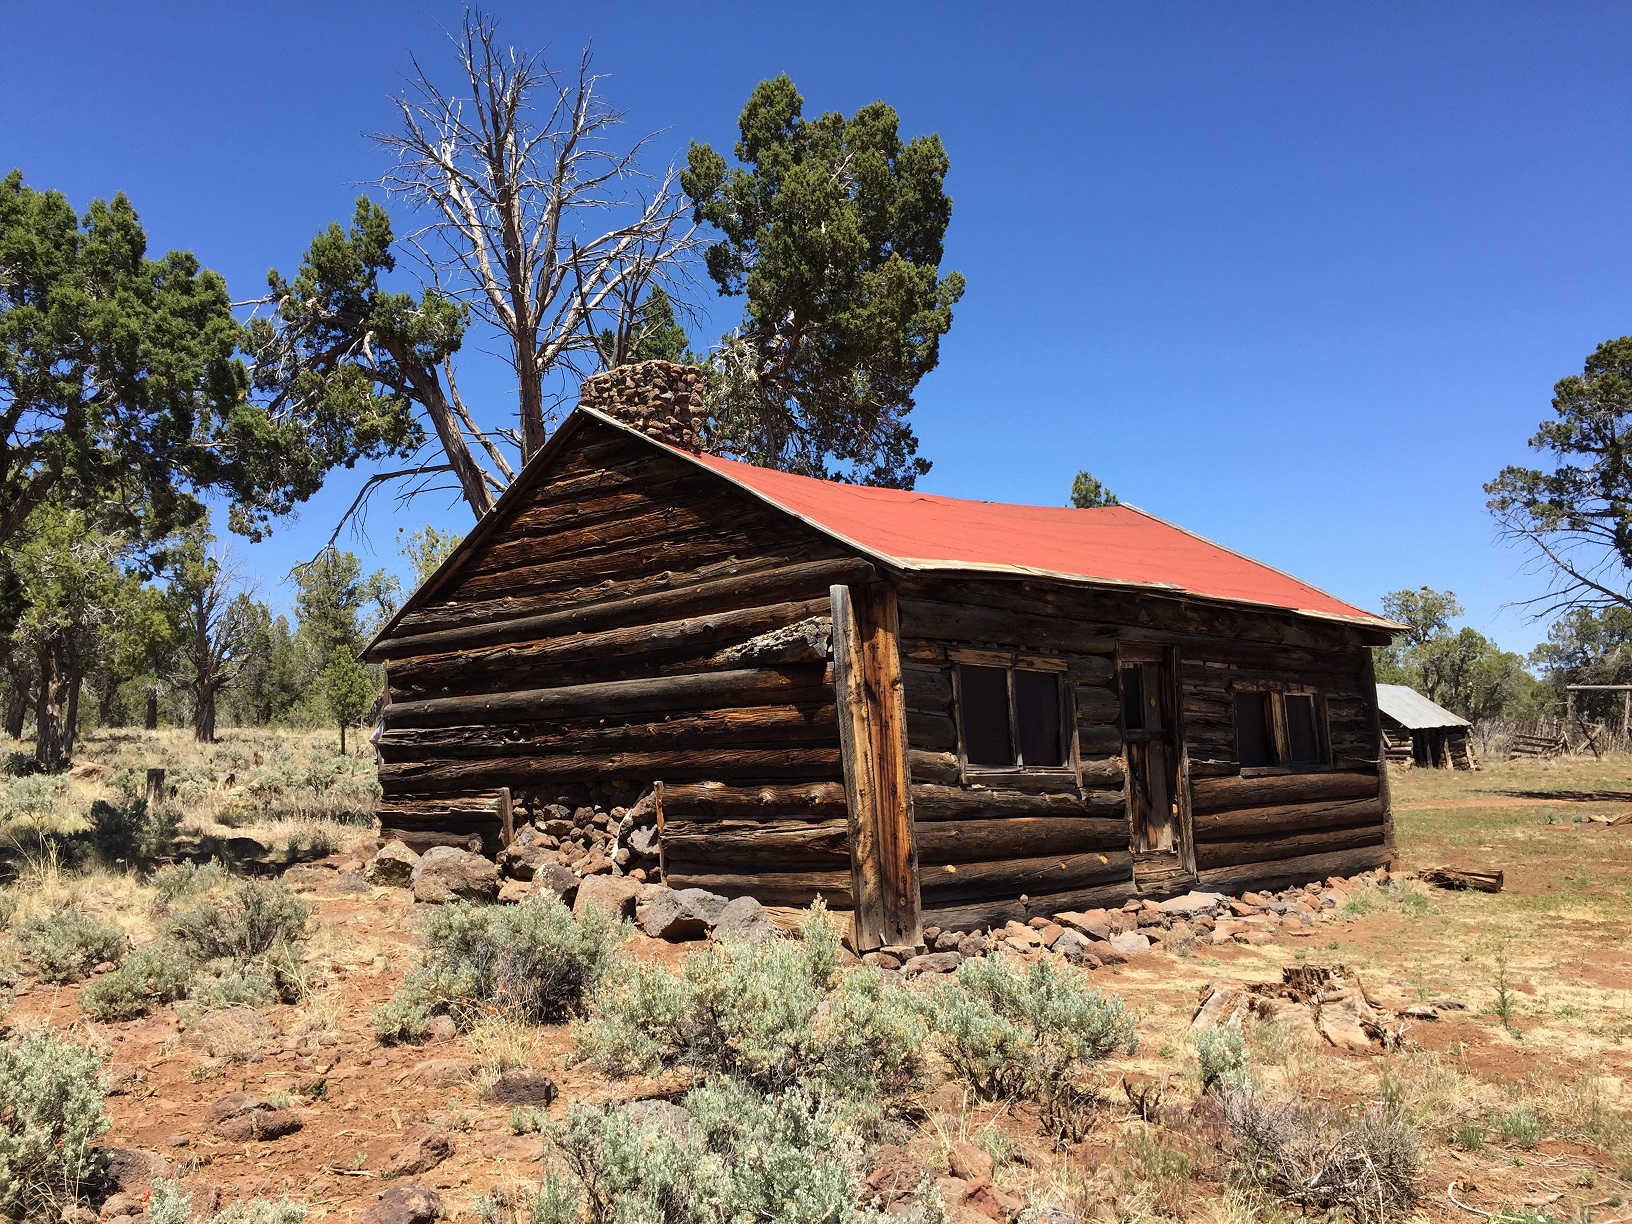 The Jonathan Deyo & Mary V. Waring cabin